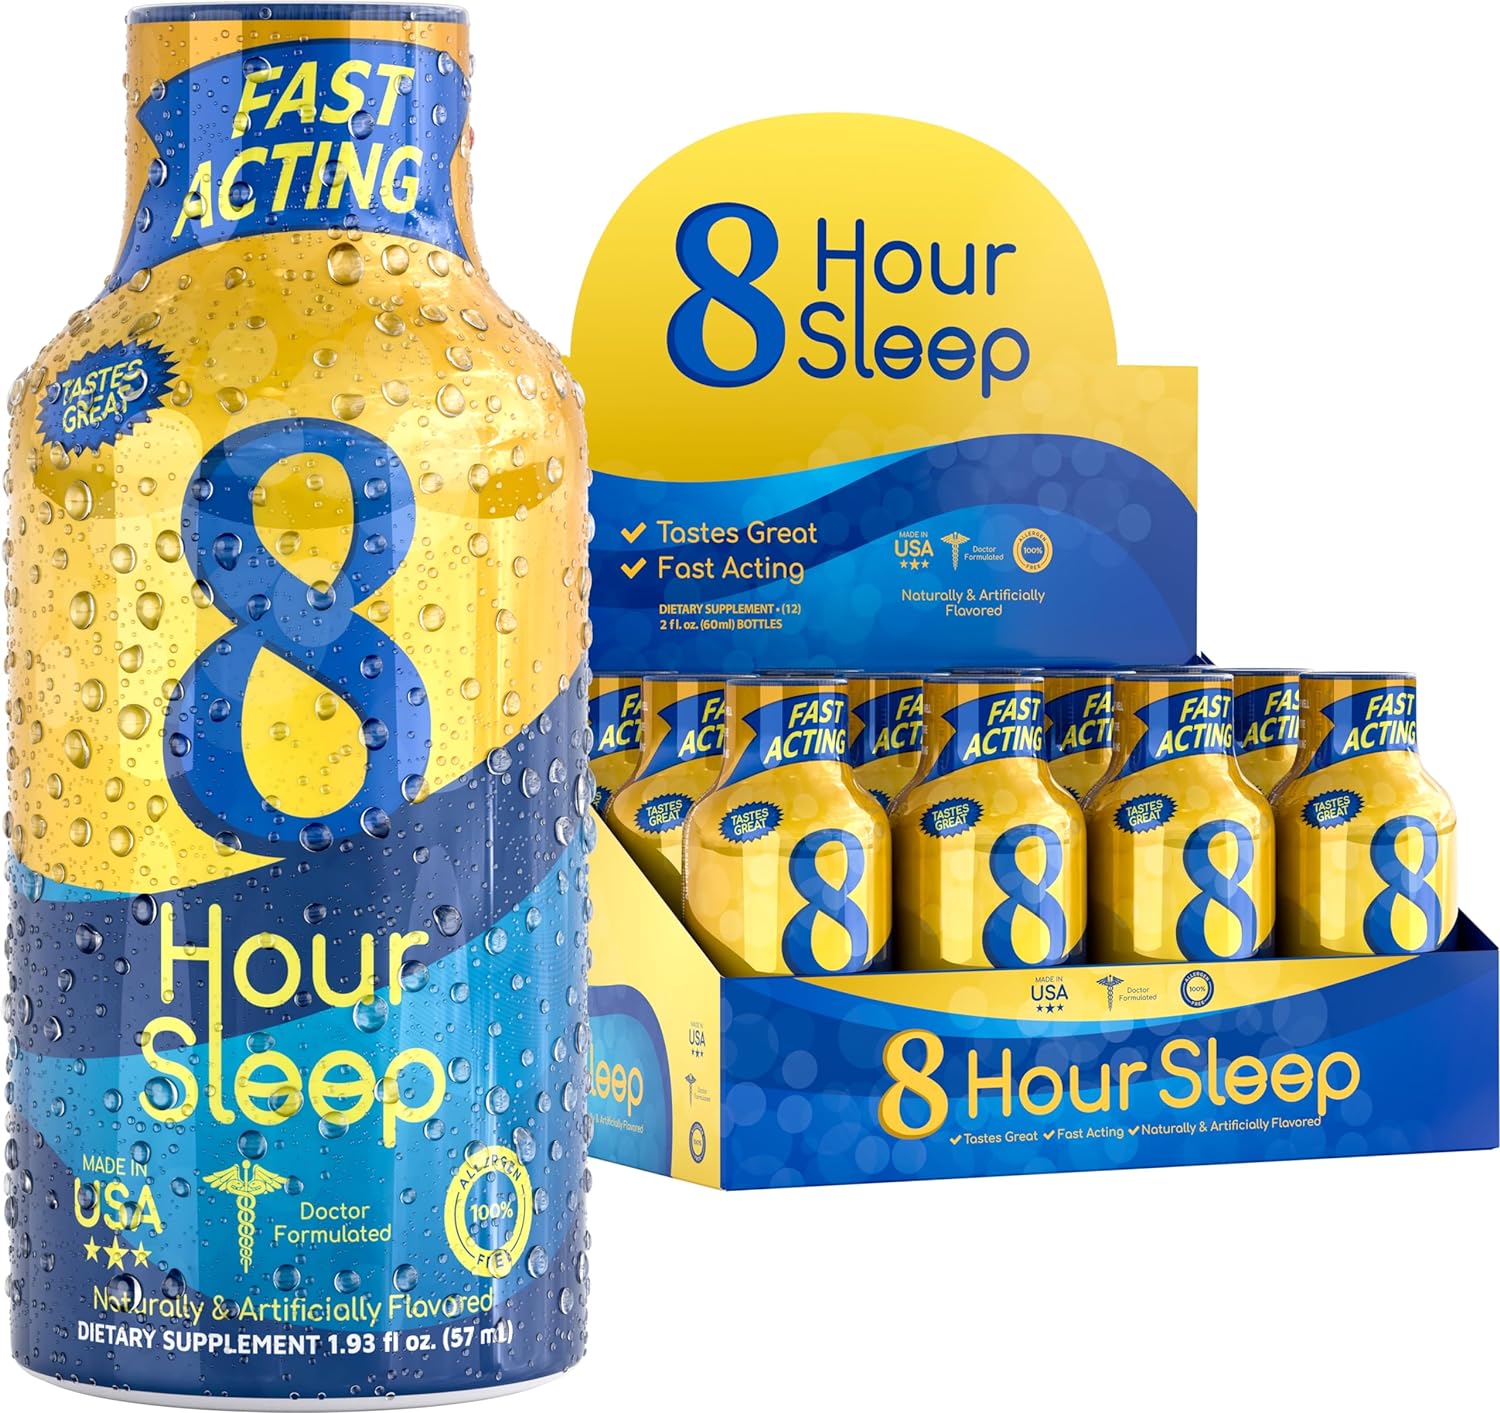 Vitamin Energy 8-Hour Sleep Drink Shots, Natural Berry Flavor, 1.93 Fl Oz, 12 Count